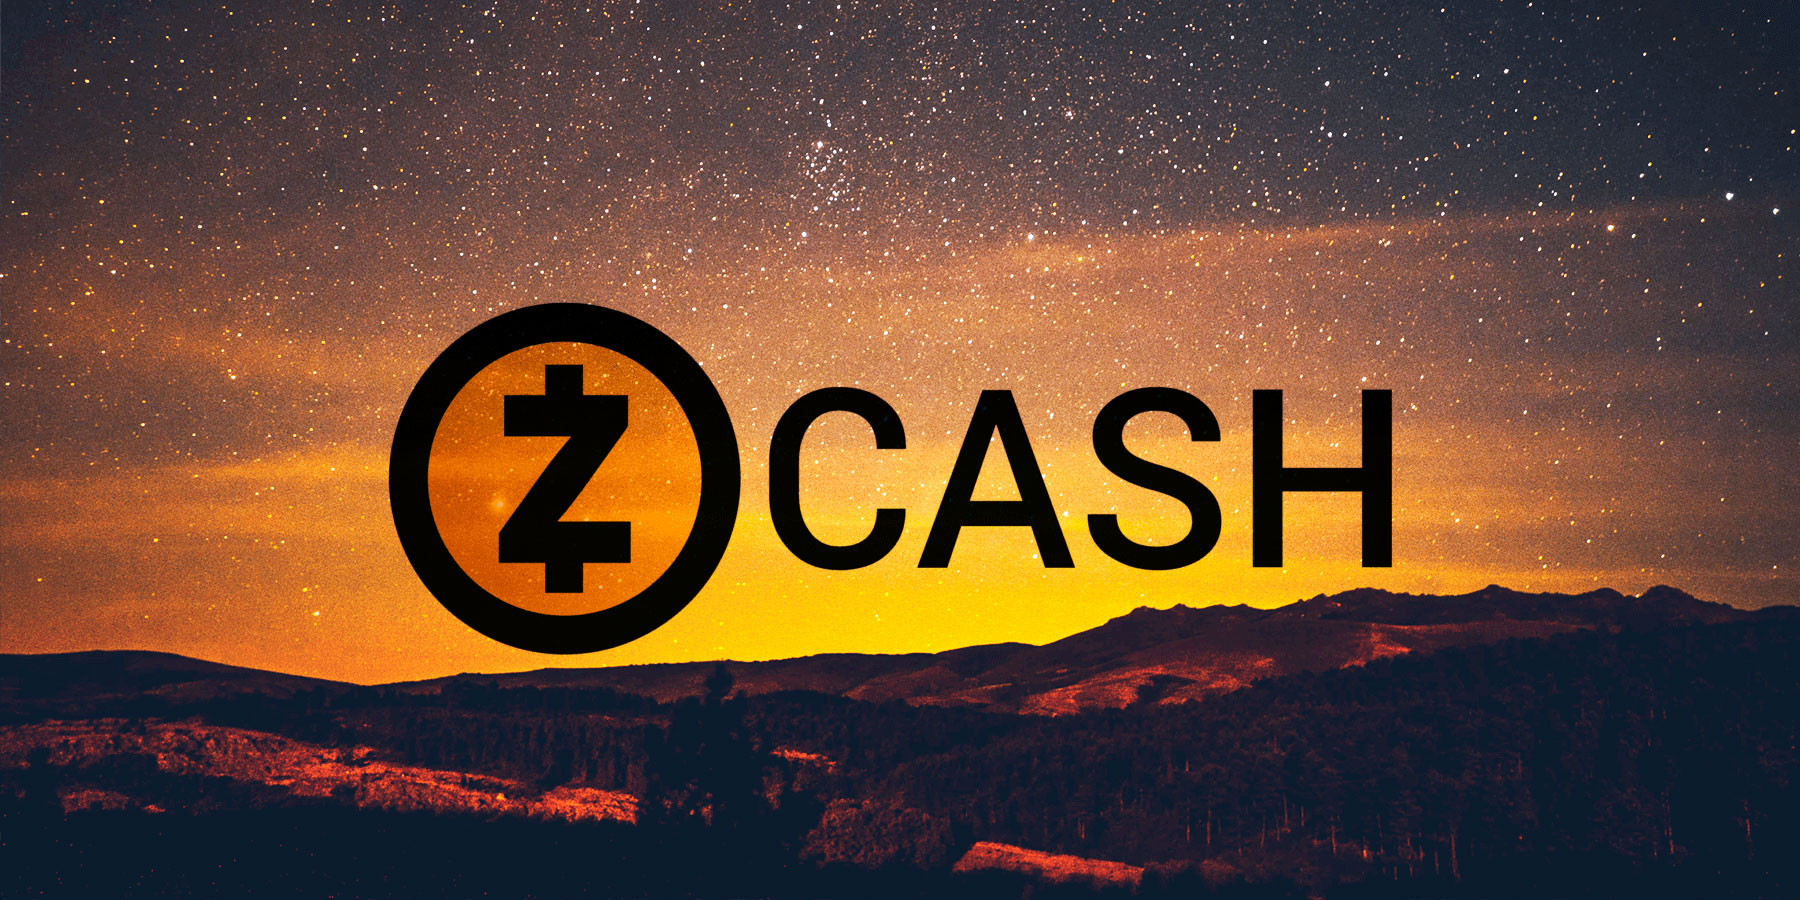 ZCASH Mining 400% More Mrofitable than Bitcoin (BTC)